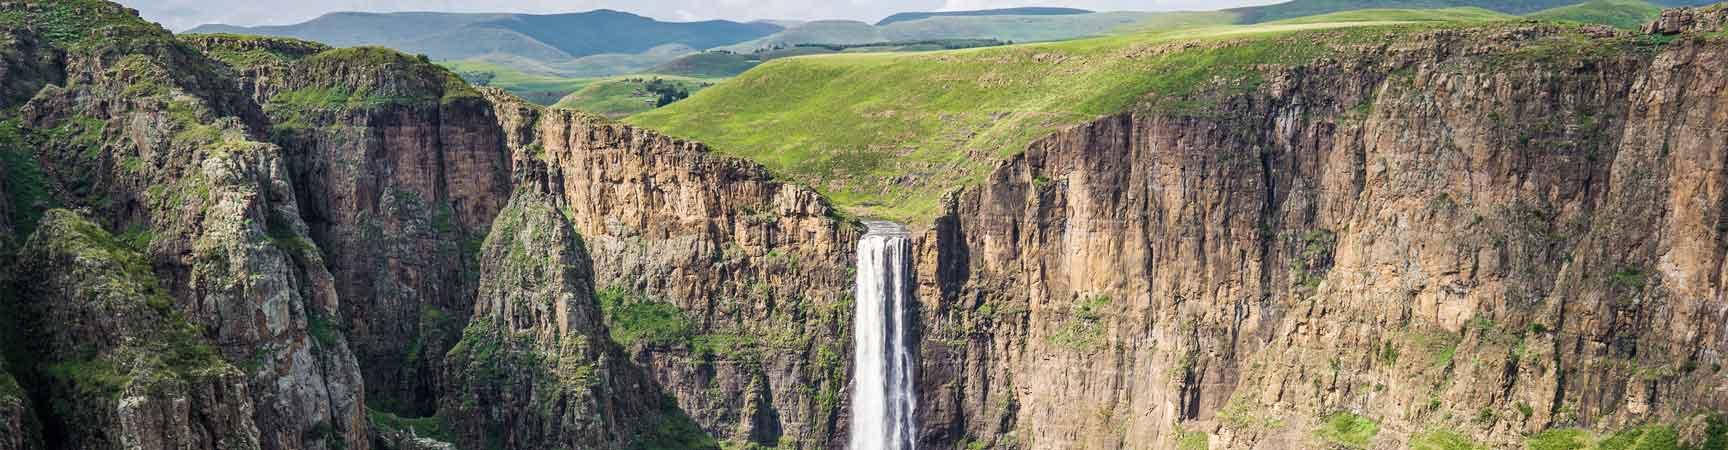 Lesotho Waterfall Panorama Image Wallpaper